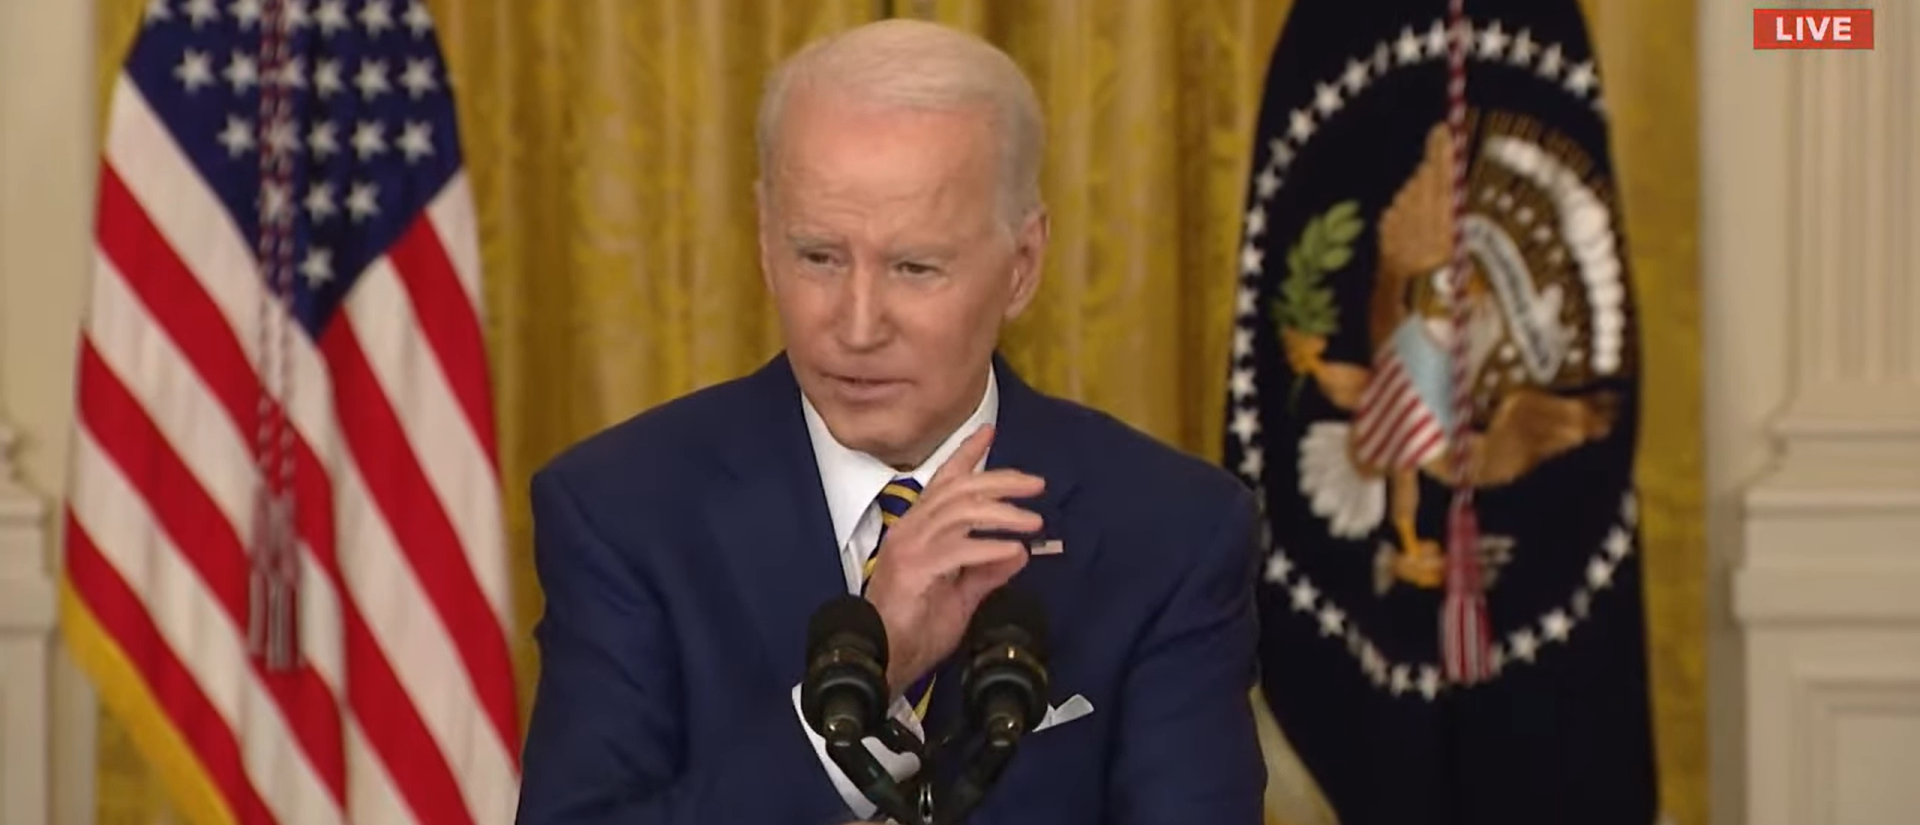 Biden Announces Meeting With A Republican Senator To Discuss SCOTUS Nominee